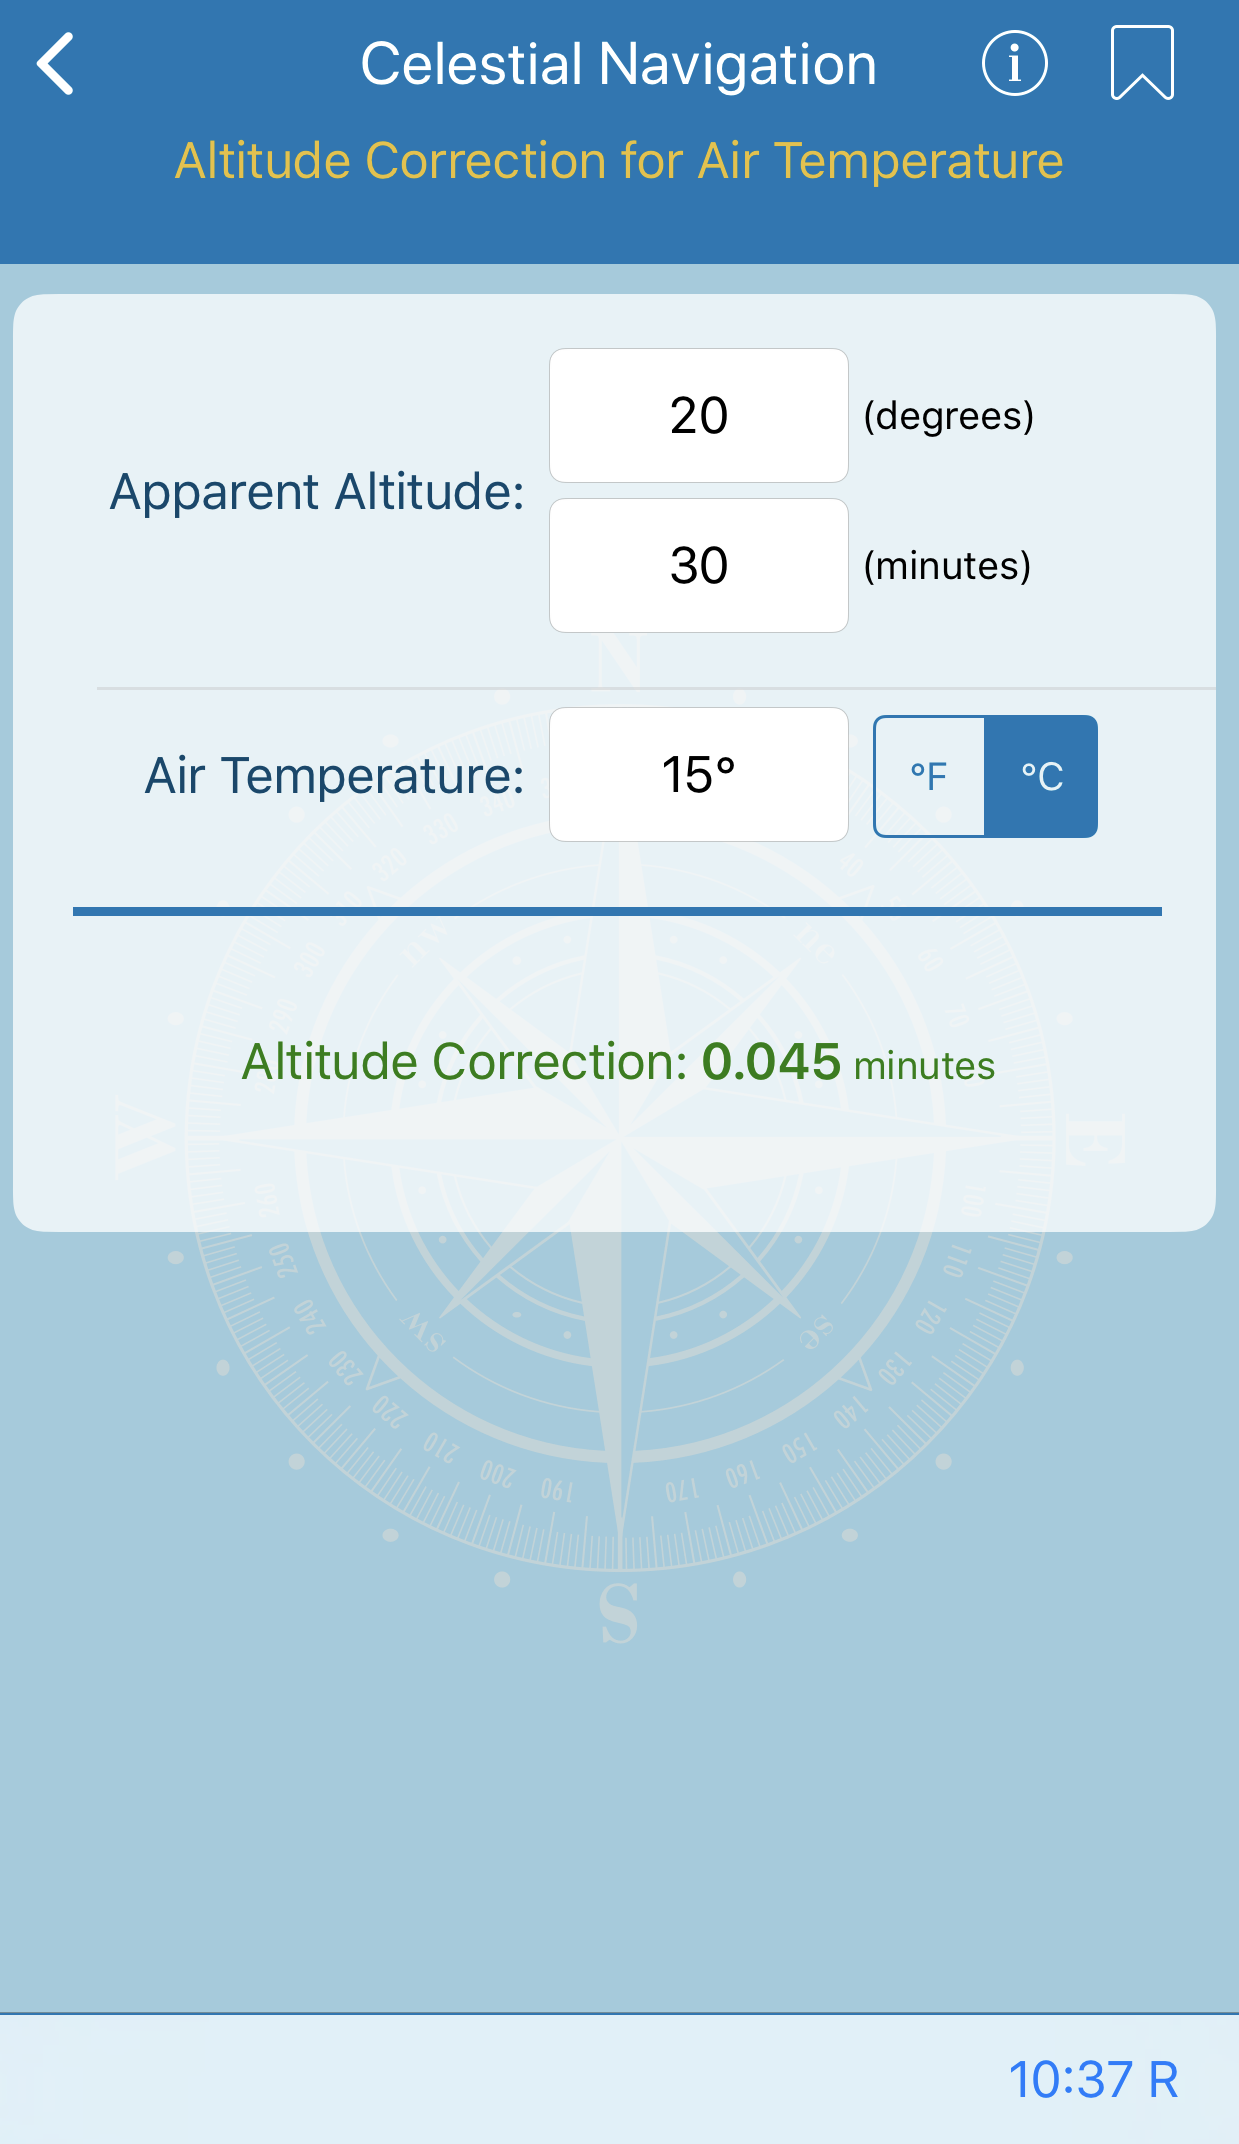 Altitude Correction for Air Temperature